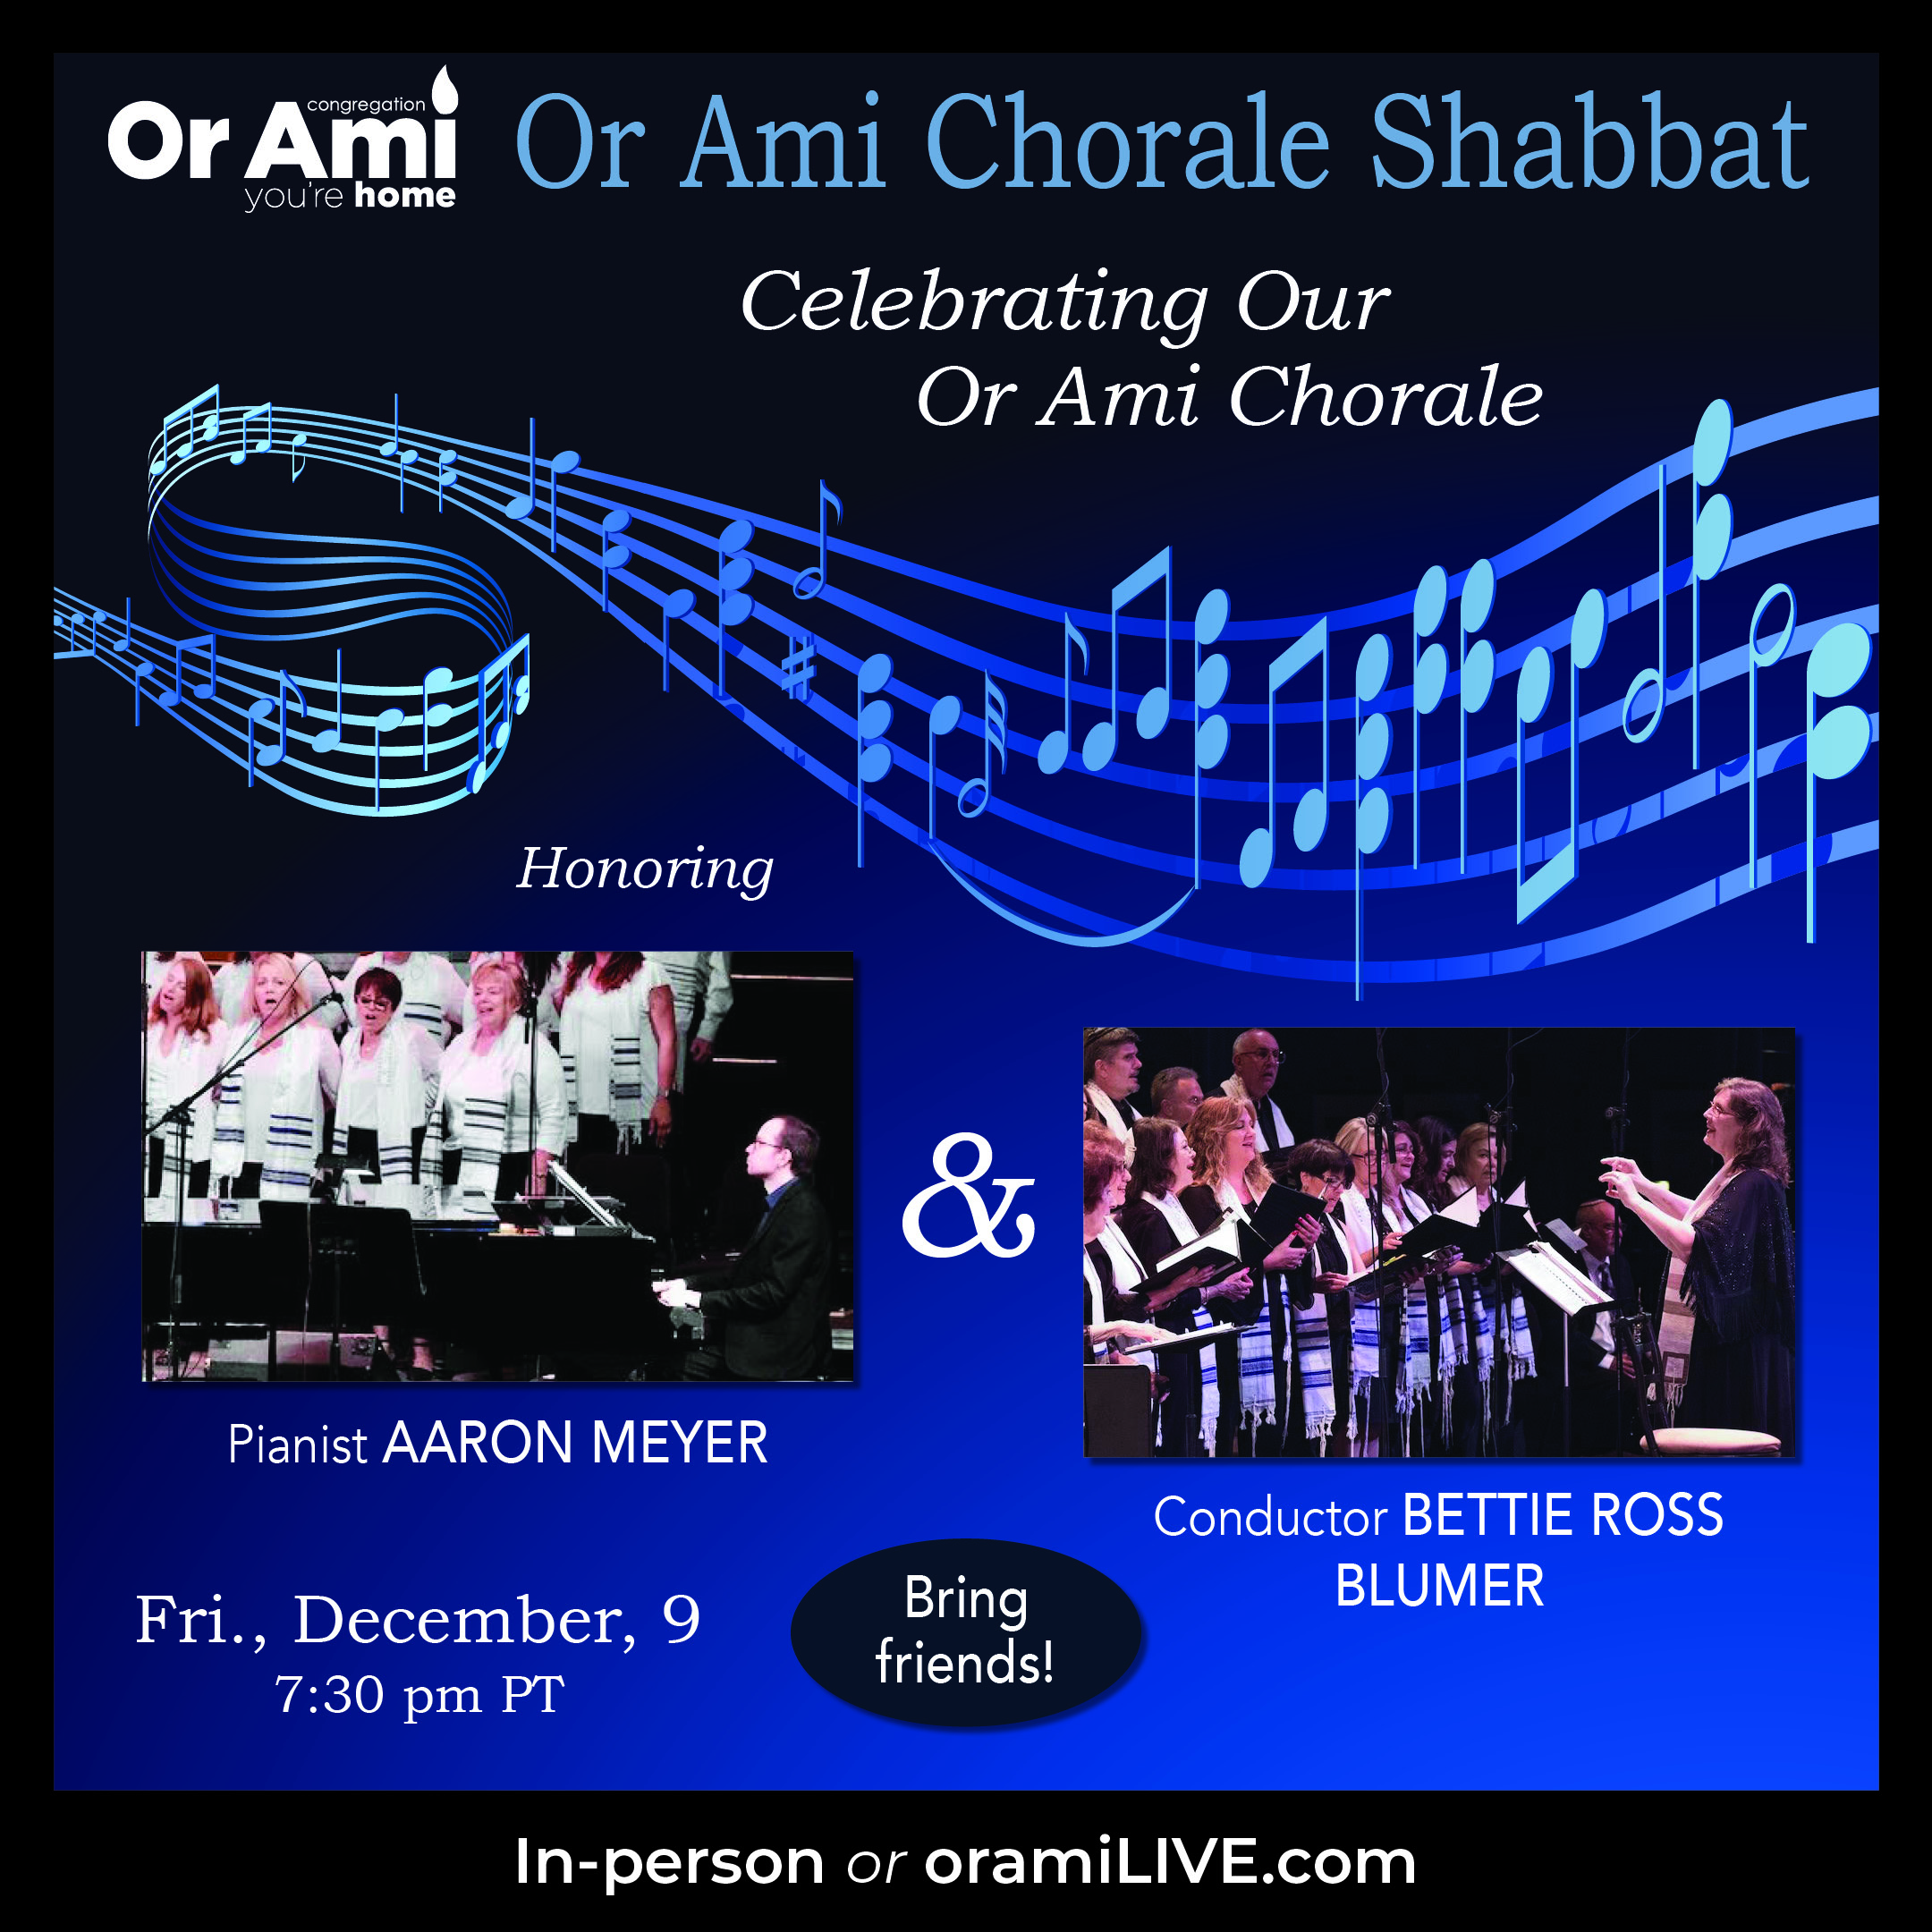 Or Ami Chorale Shabbat